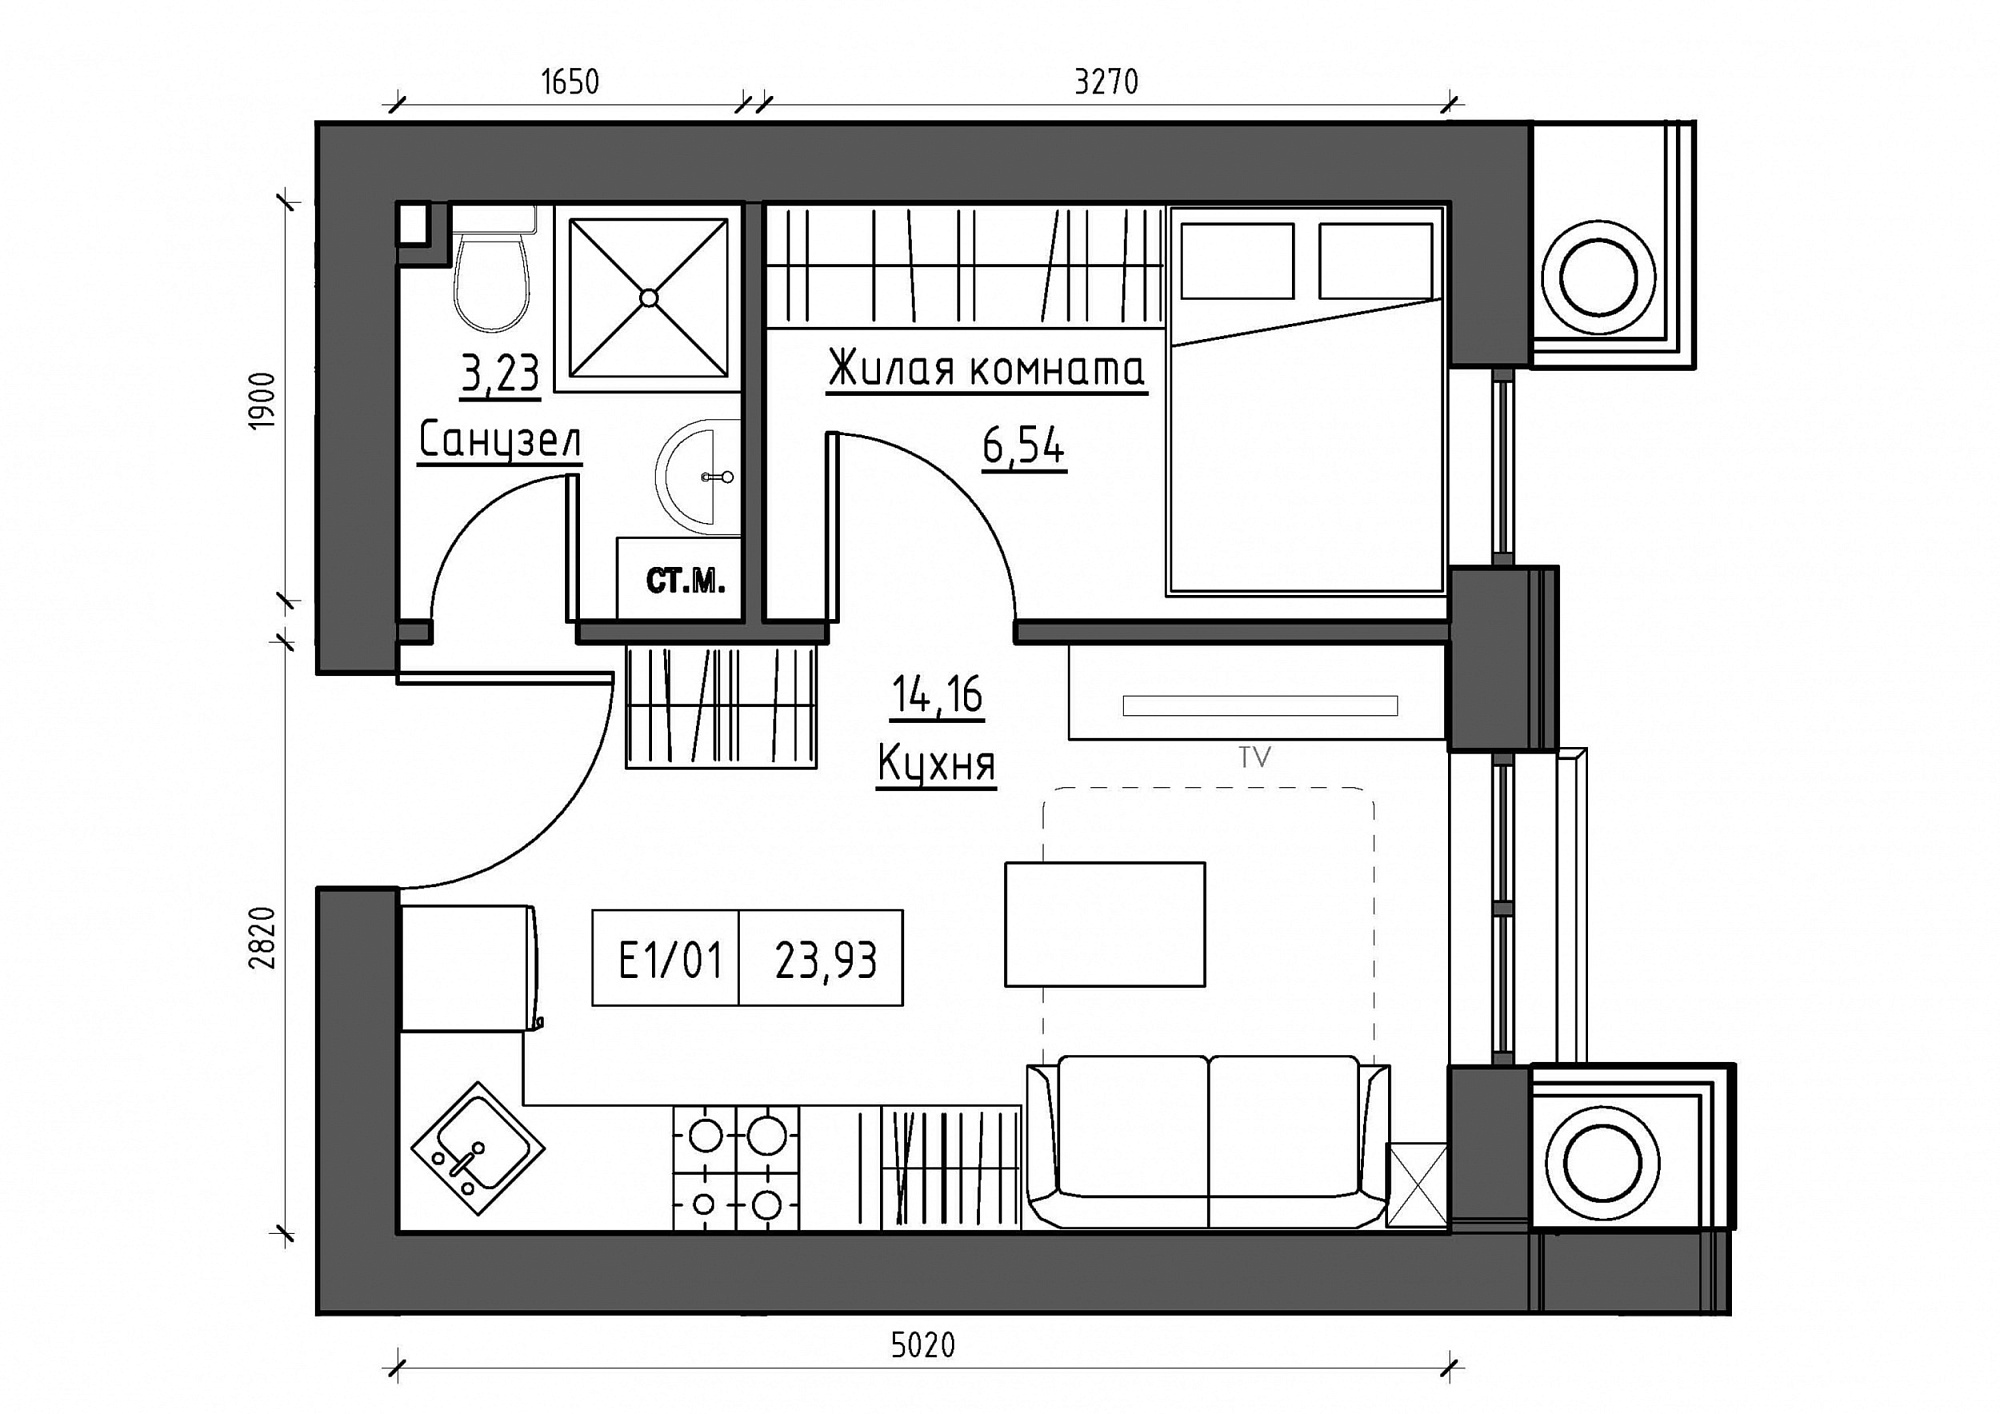 Planning 1-rm flats area 23.93m2, KS-011-03/0004.